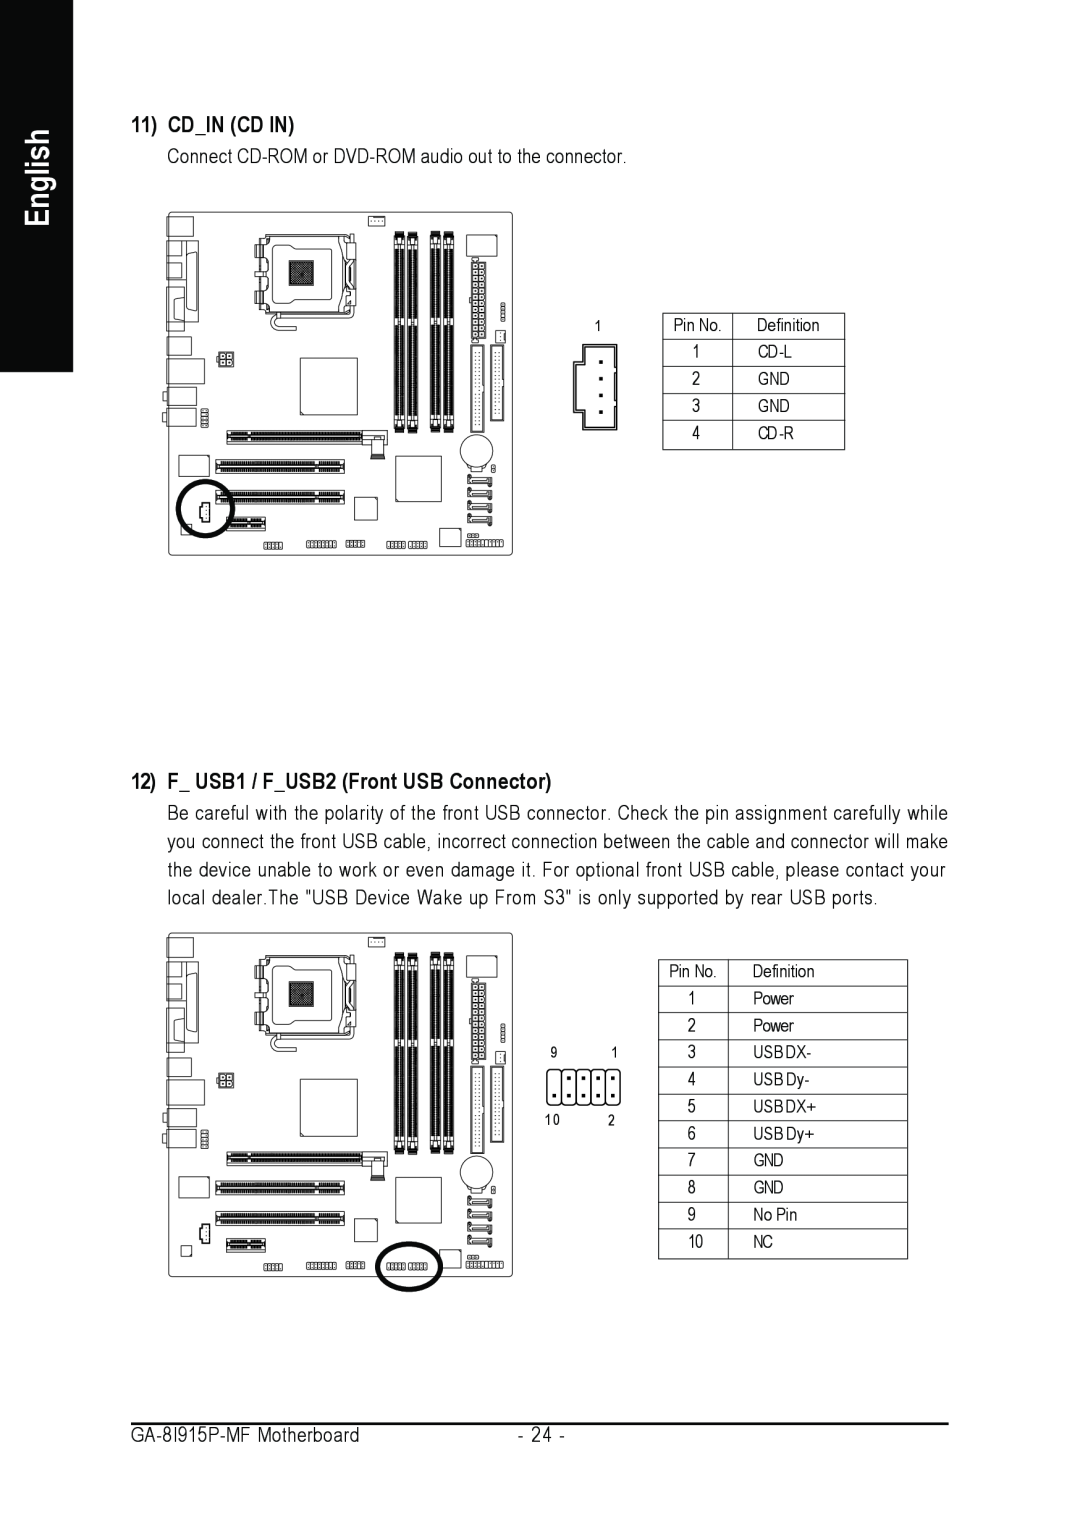 Gigabyte GA-8I915P-MF user manual Cdin Cd In, F USB1 / FUSB2 Front USB Connector, English 